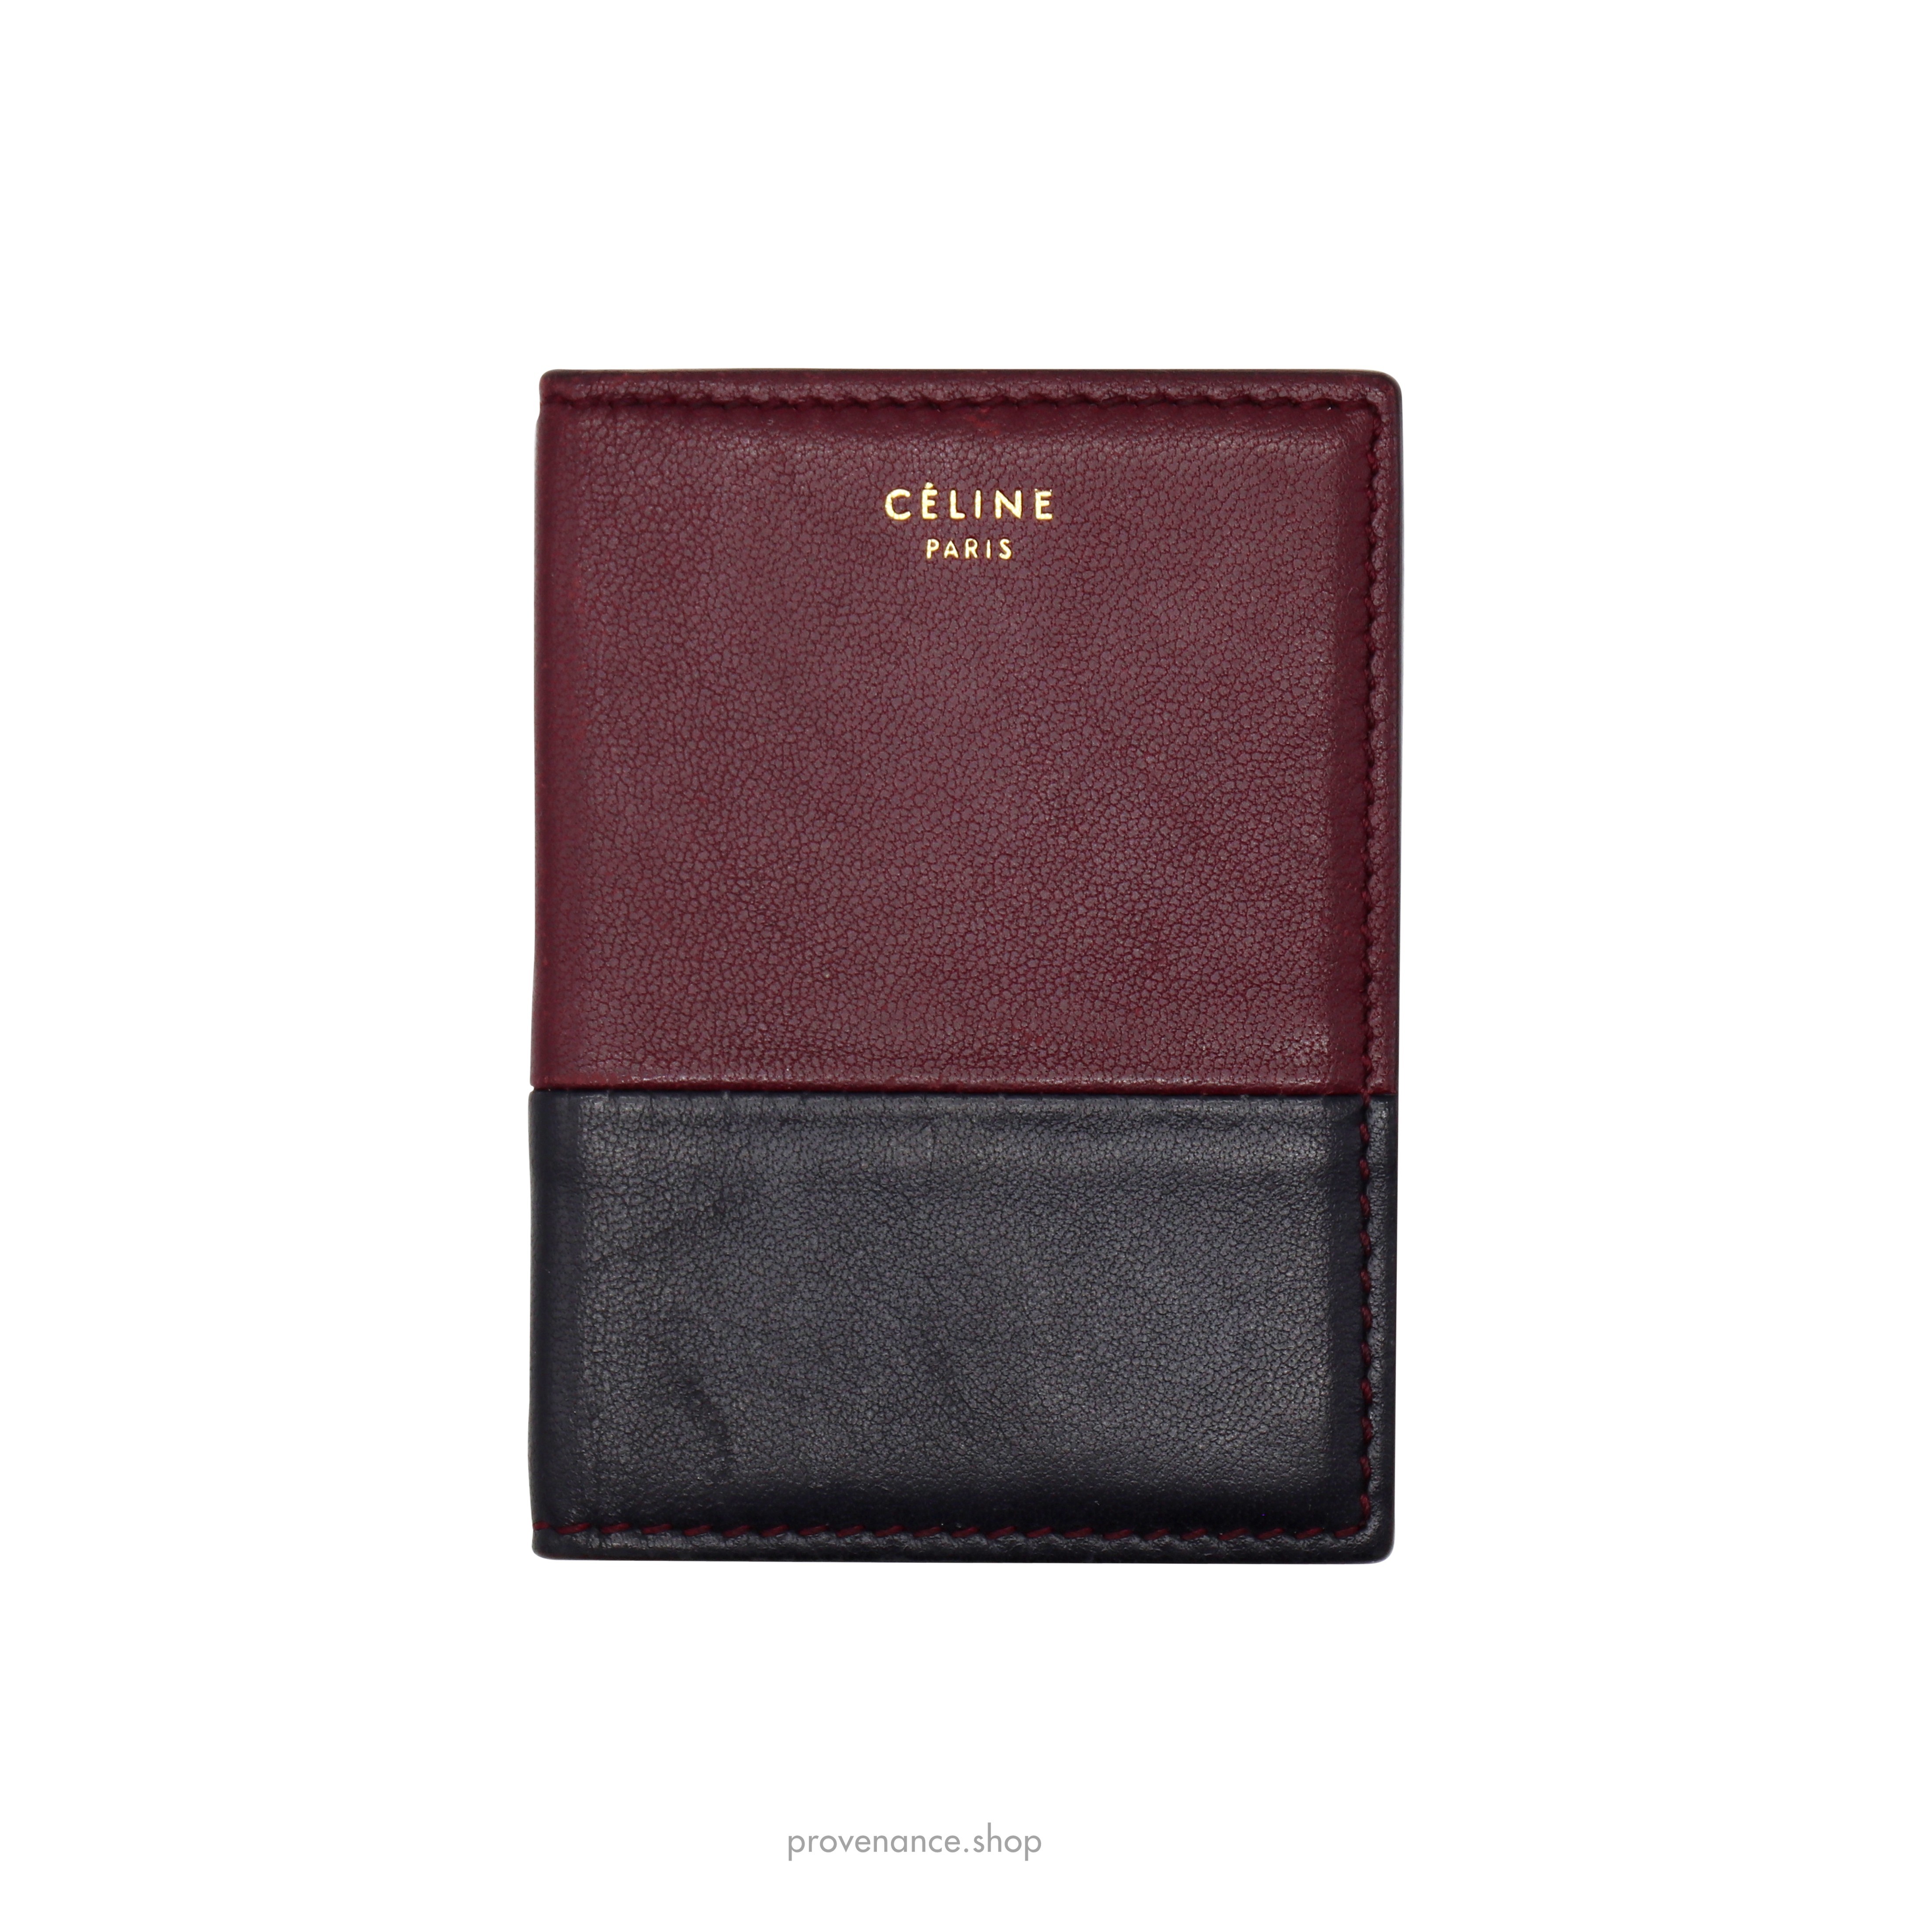 Pocket Organizer Wallet - Black & Burgundy Leather - 1